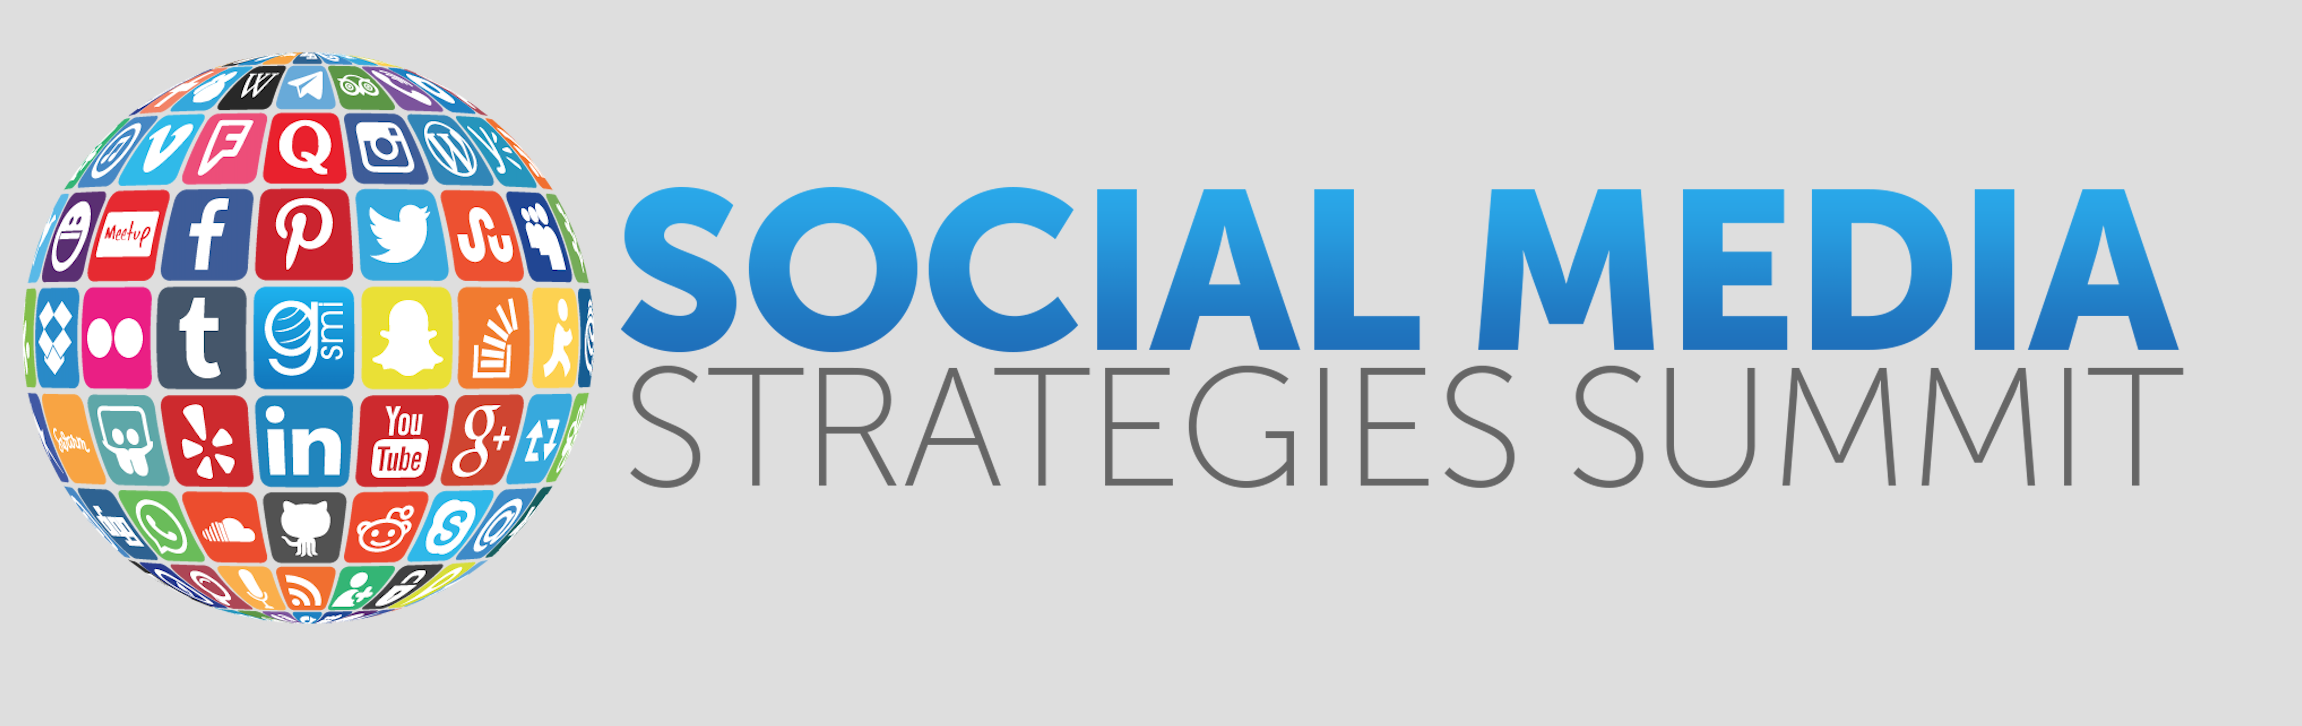 Social Media Strategies Summit, Chicago, Illinois, United States